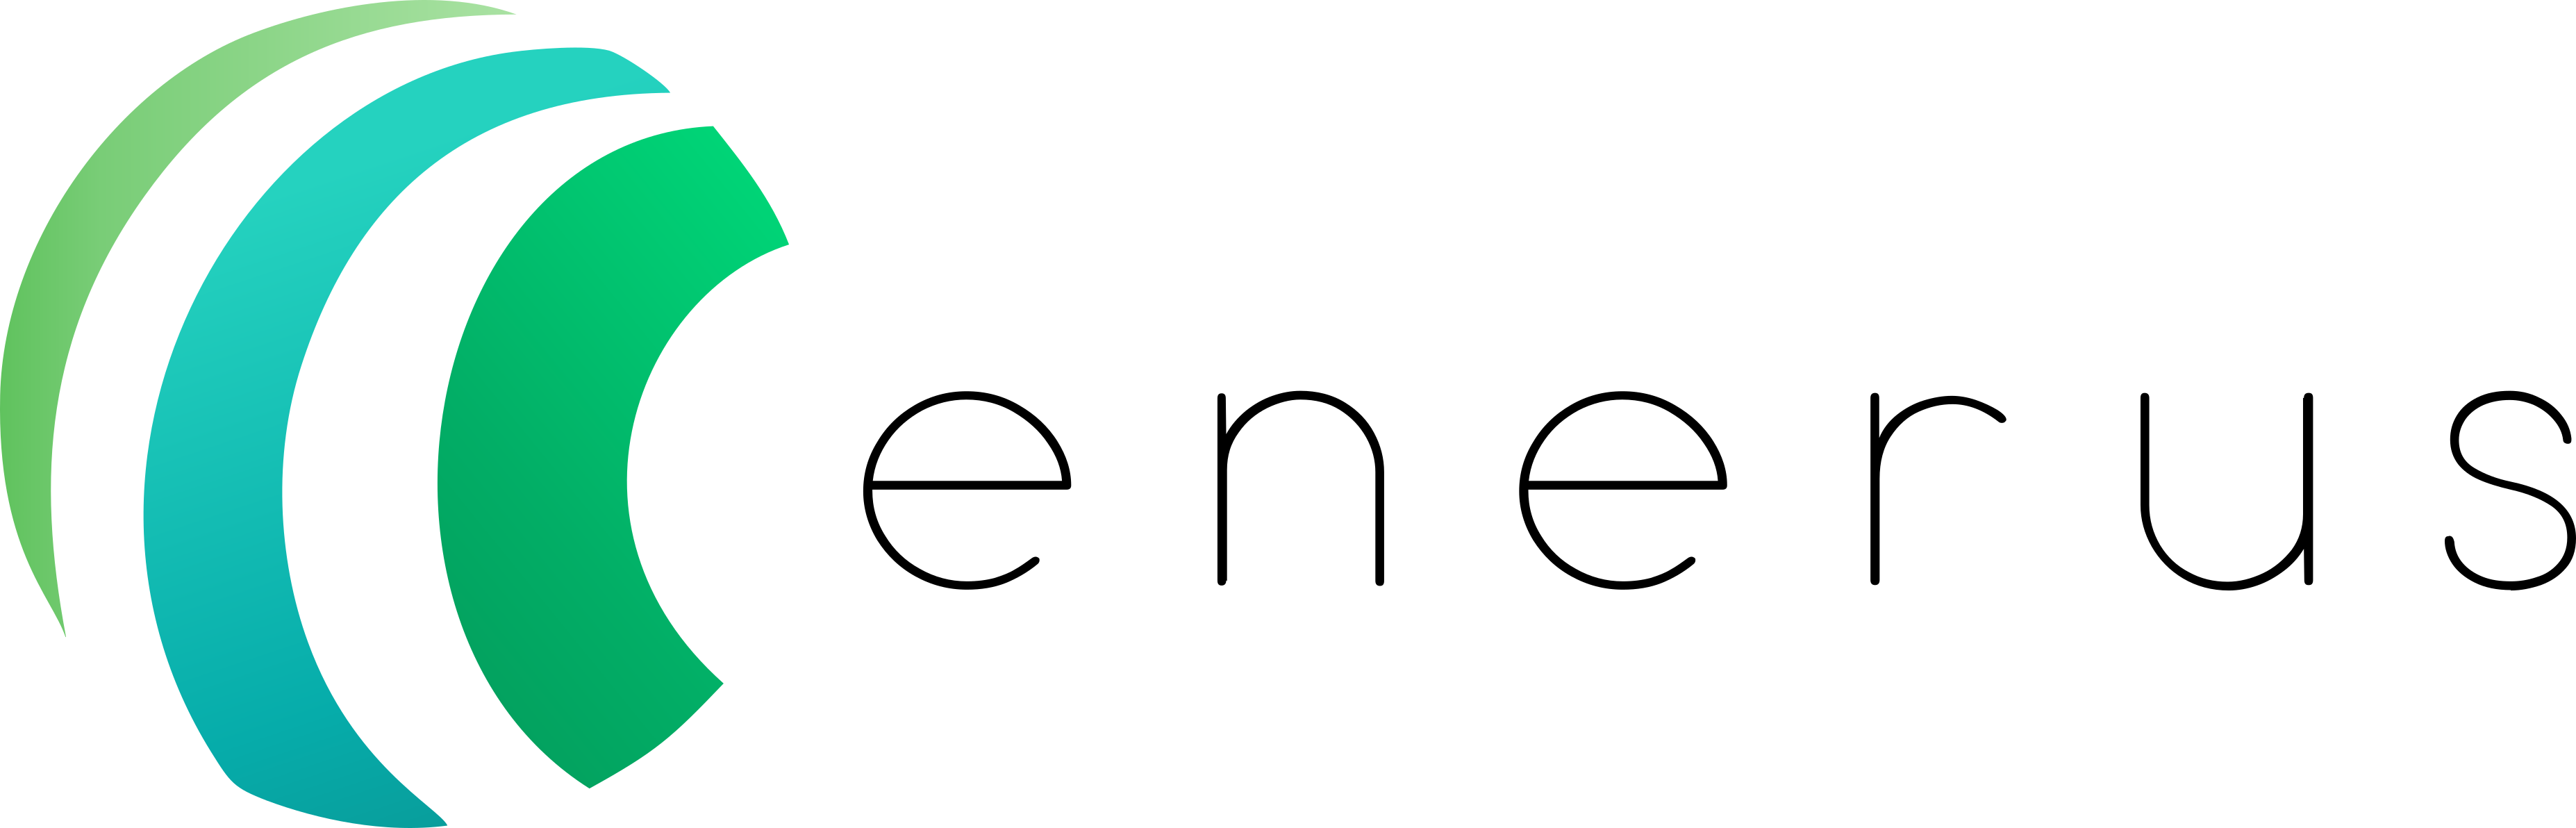 Enerus website logo